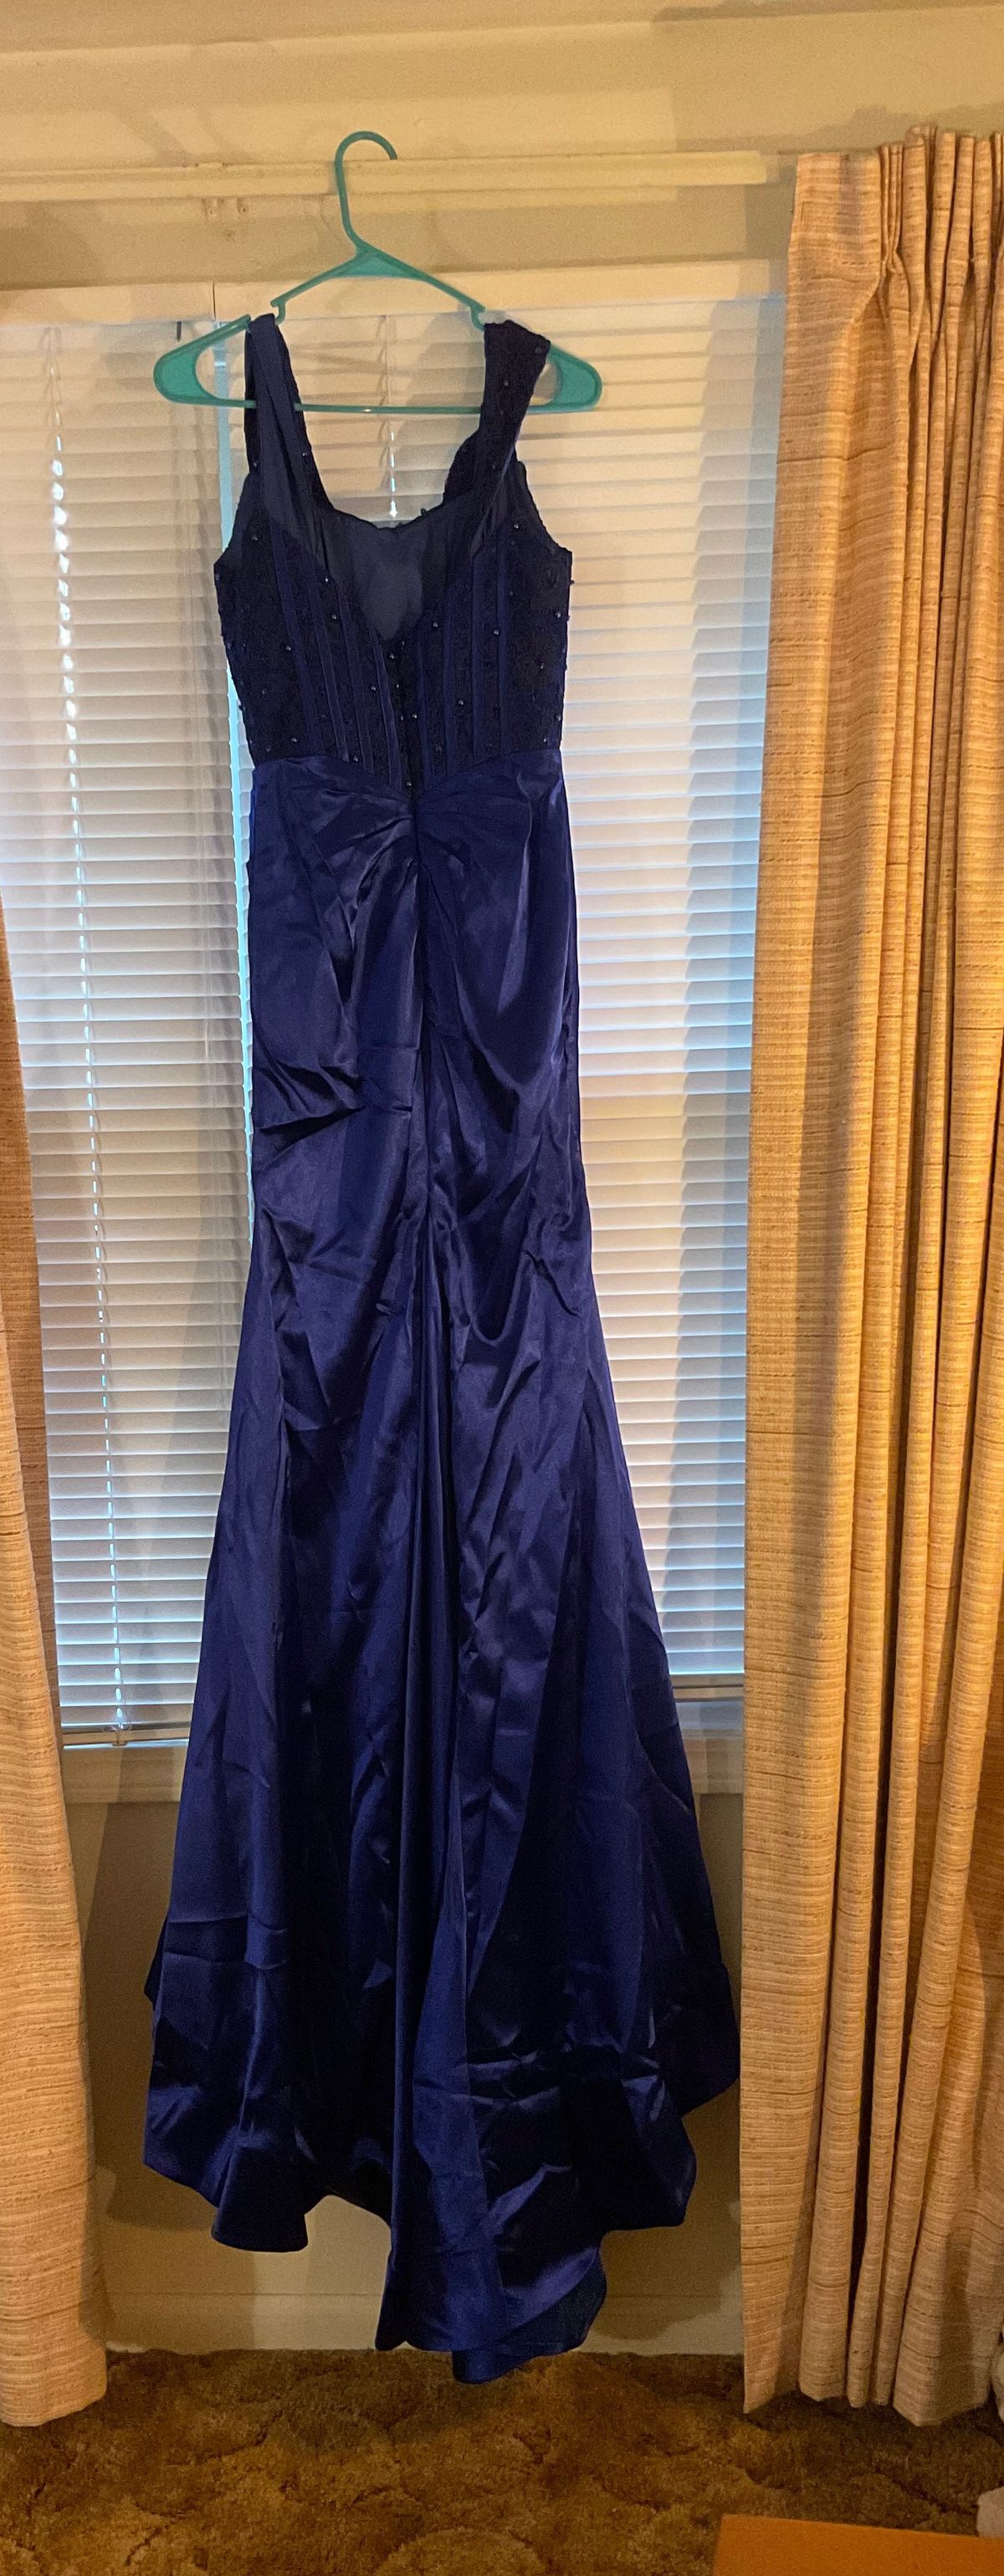 Size 2 Prom Off The Shoulder Sequined Royal Blue Side Slit Dress on Queenly